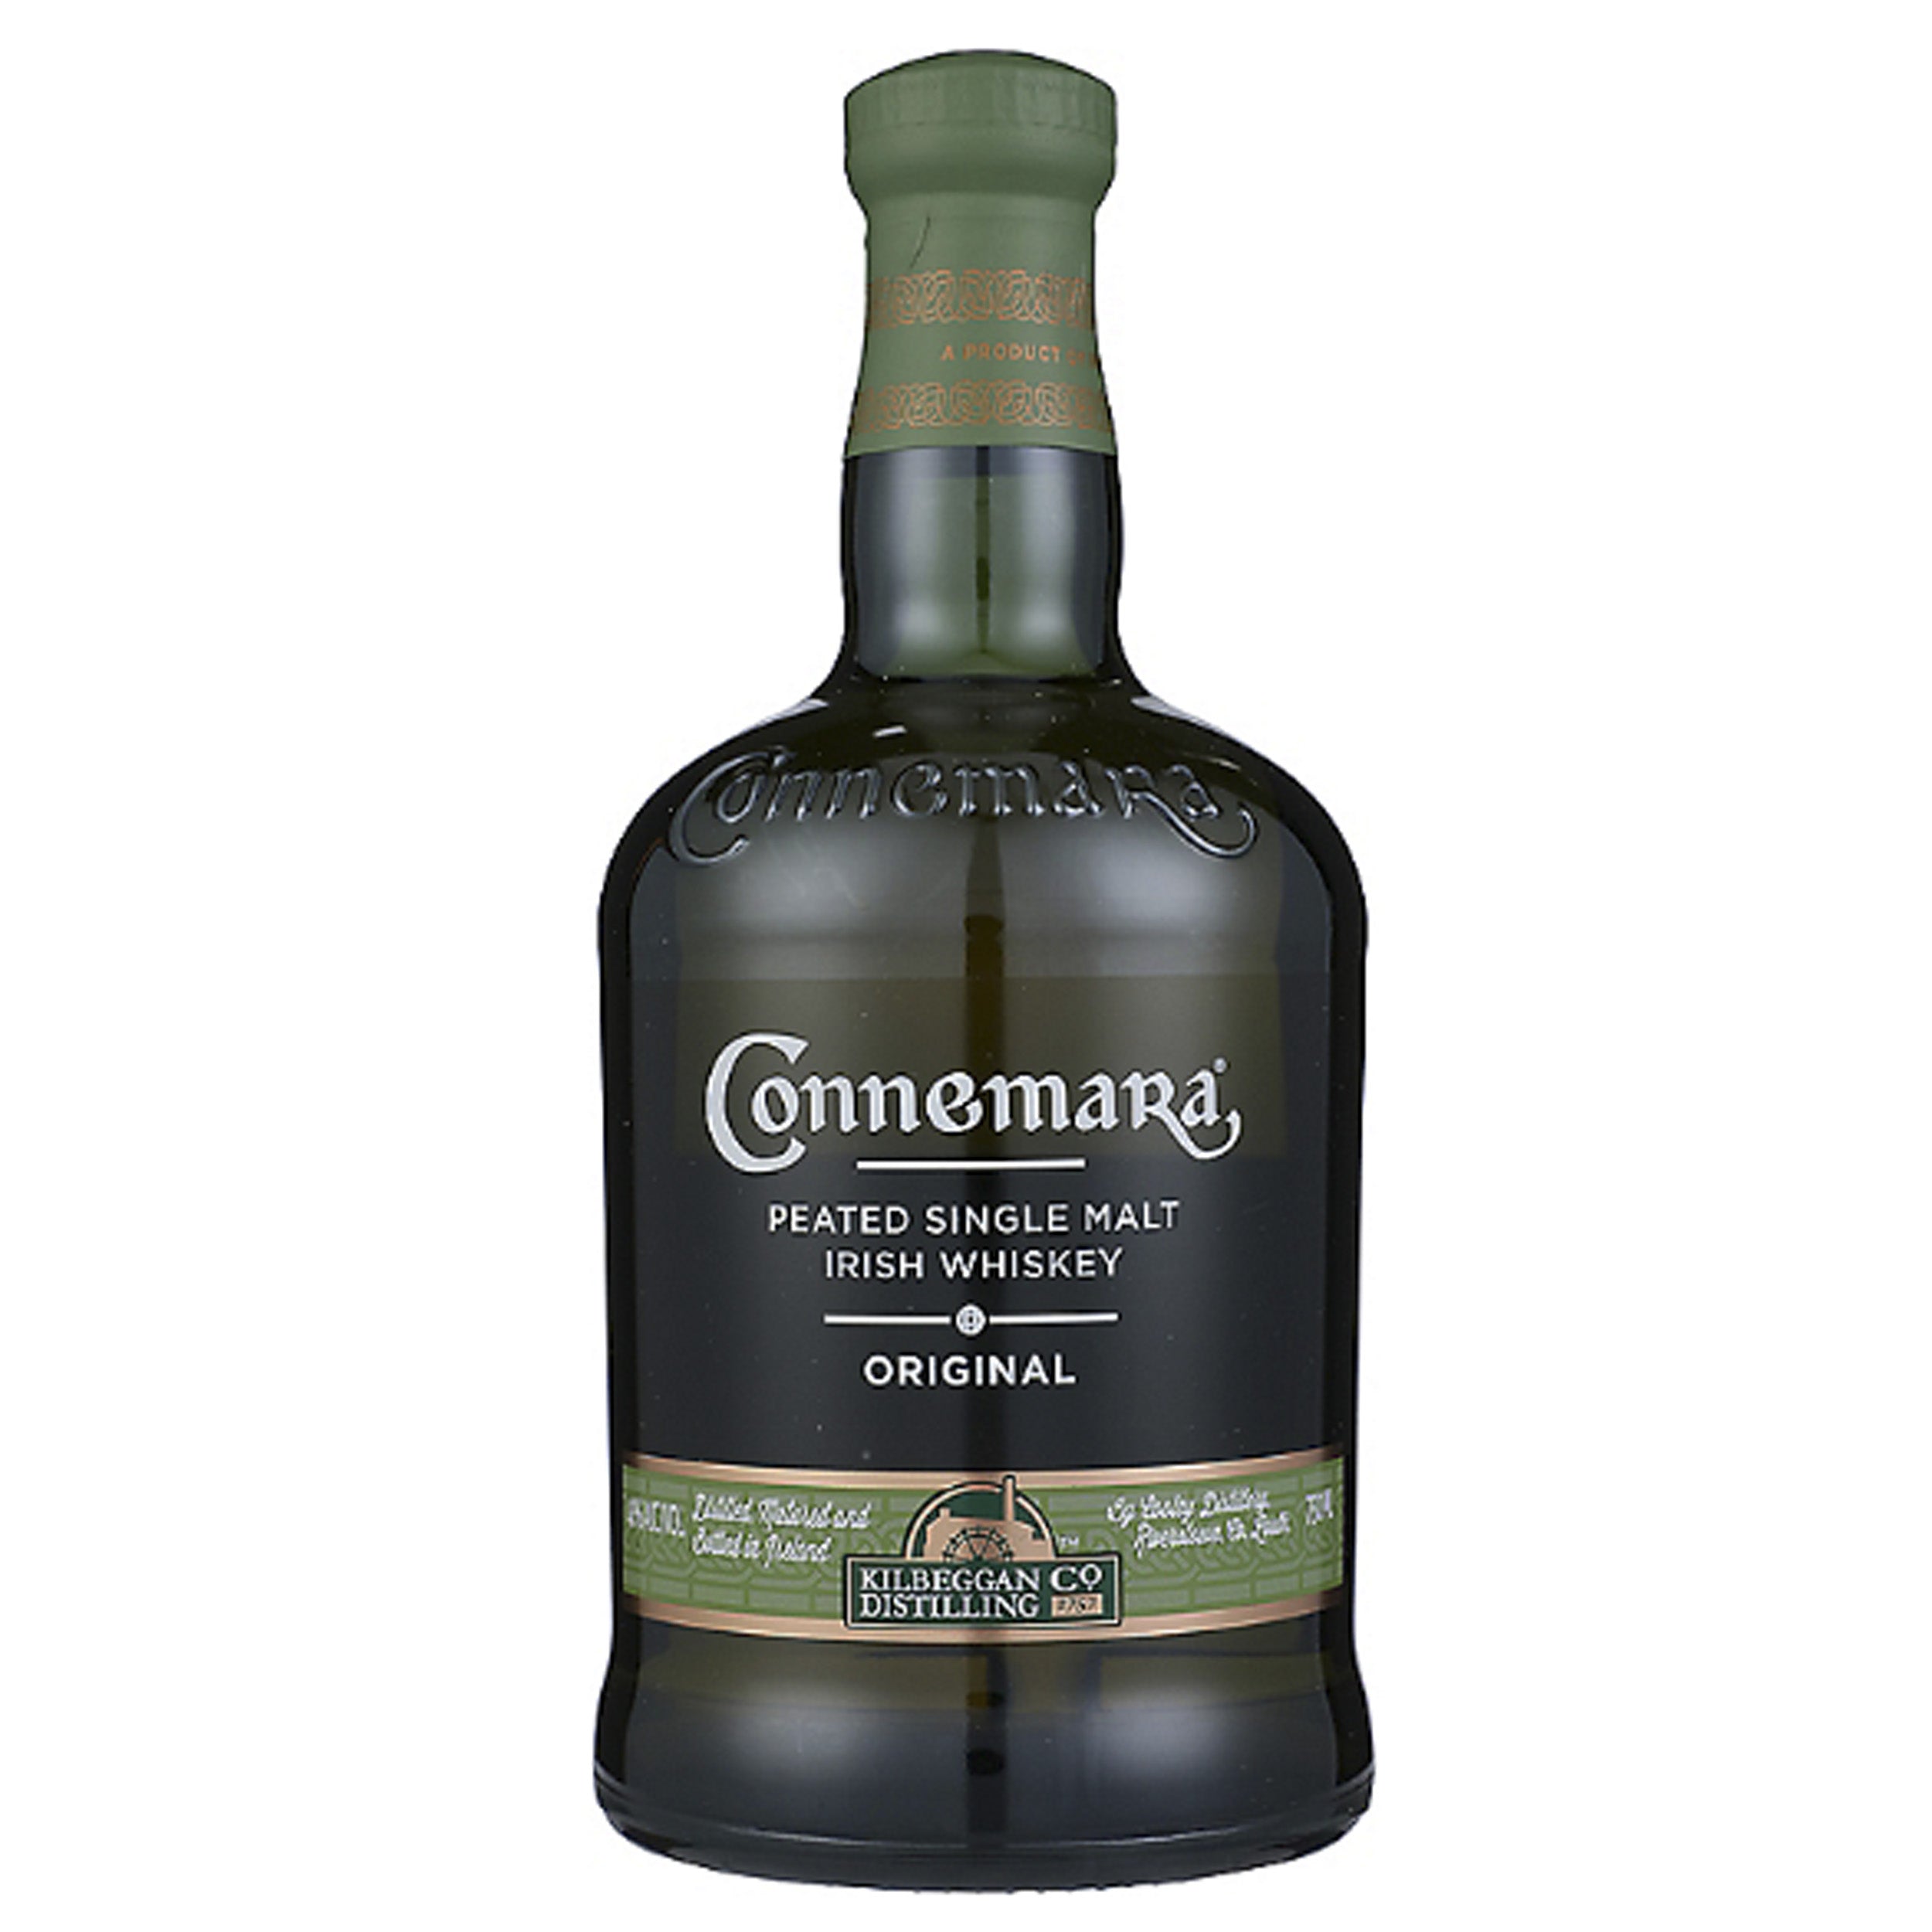 Connemara Single Malt Peated Irish Whiskey